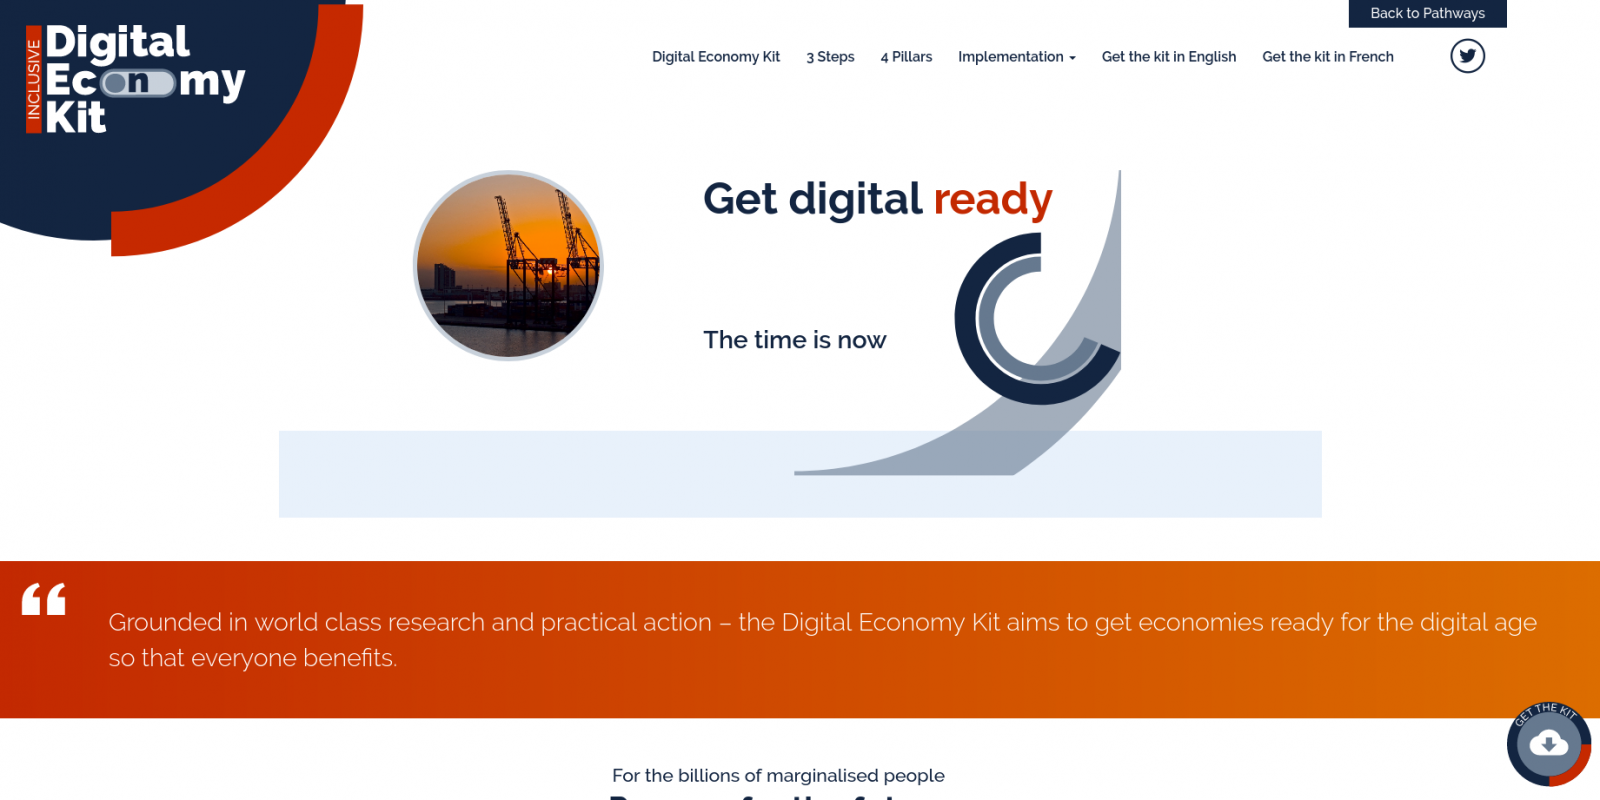 Pathways for Prosperity Commission, University of Oxford - Digital Economy Toolkit